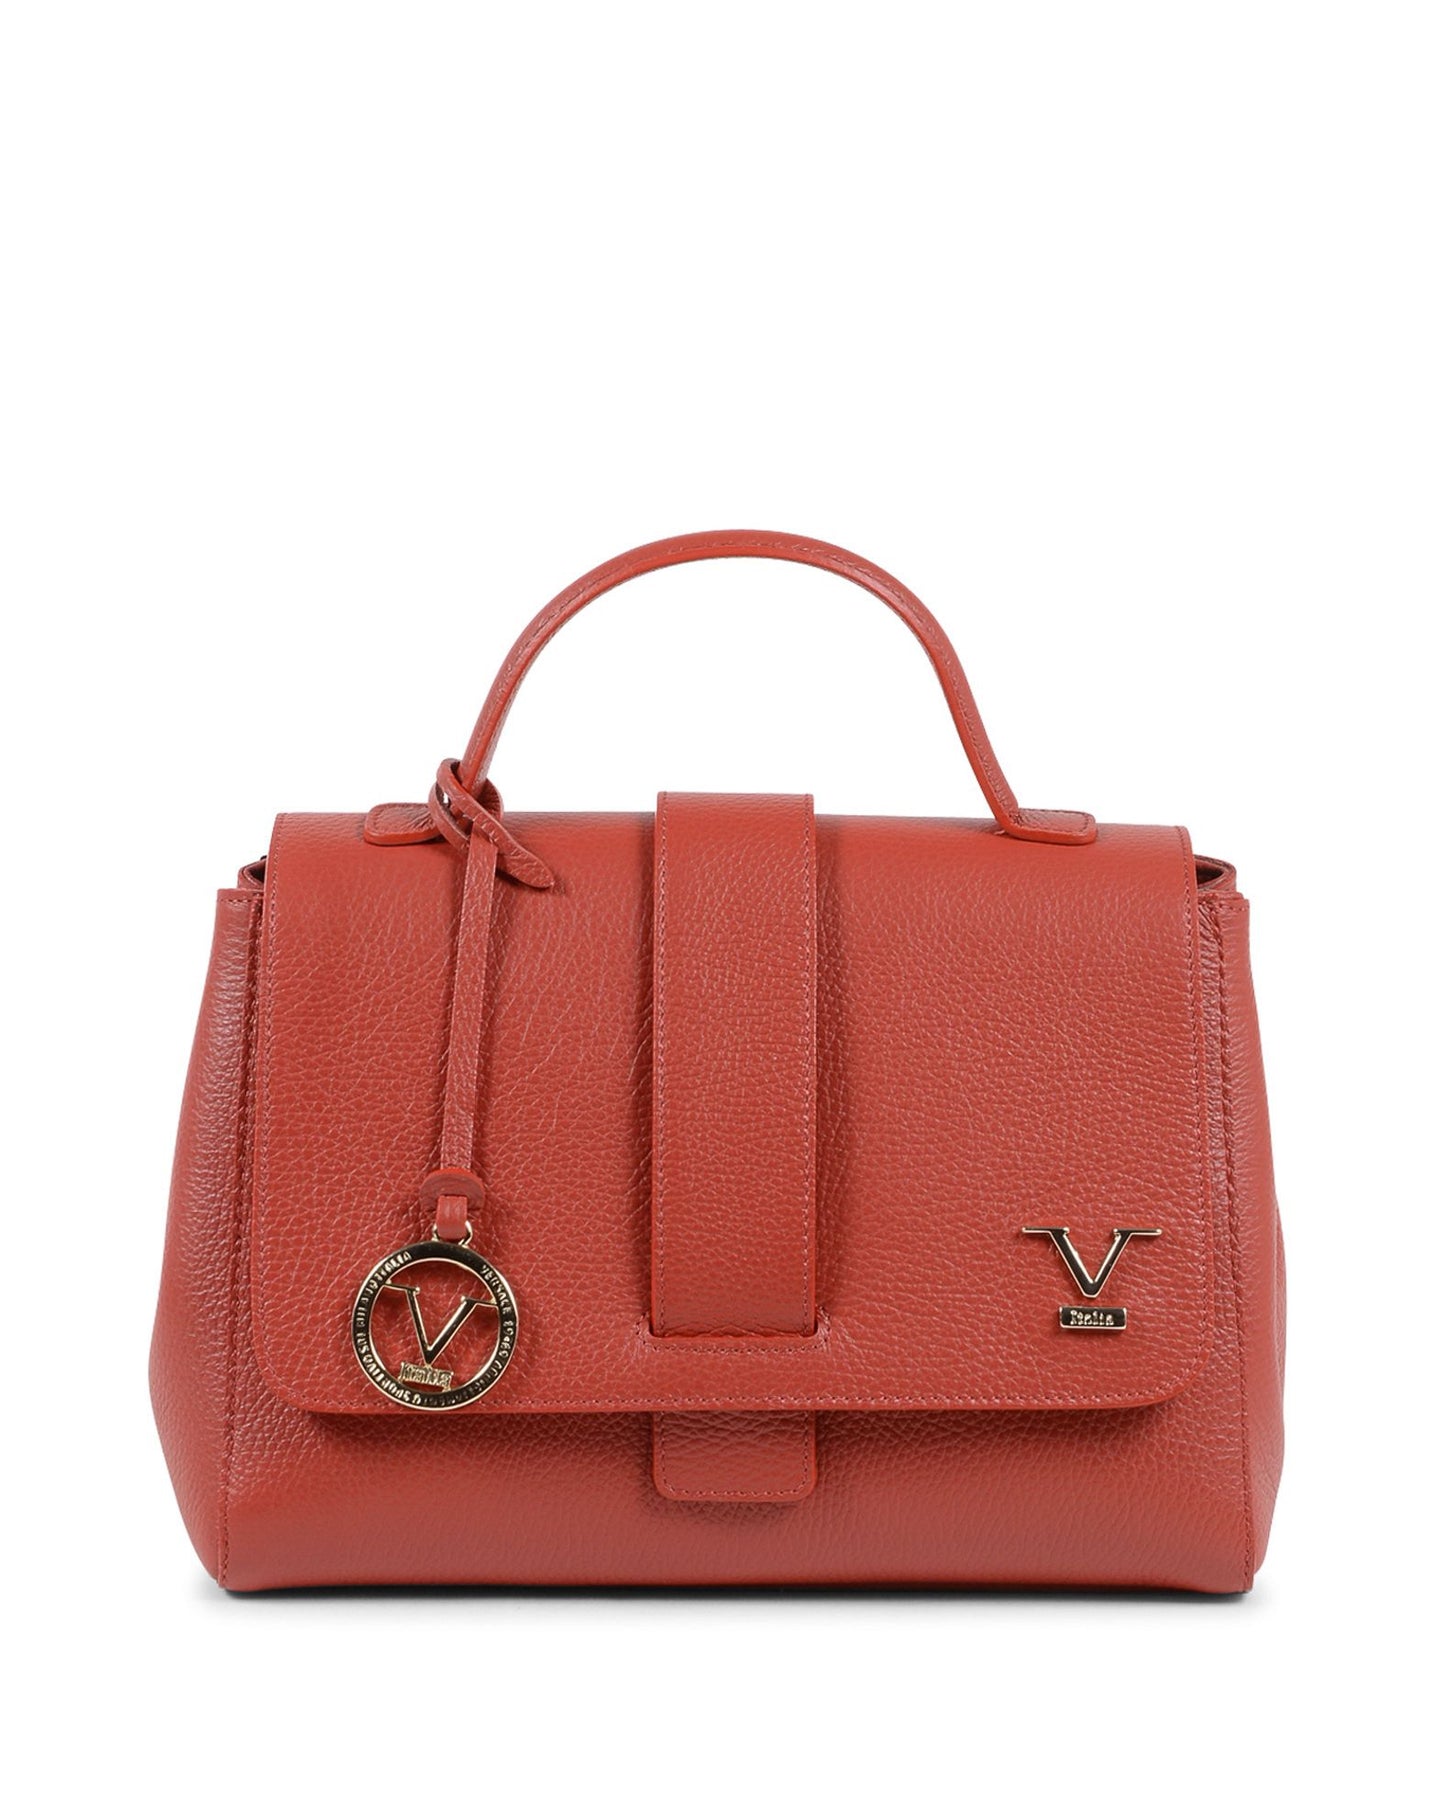 V Italia Womens Handbag Red BC10280 52 DOLLARO ROSSO